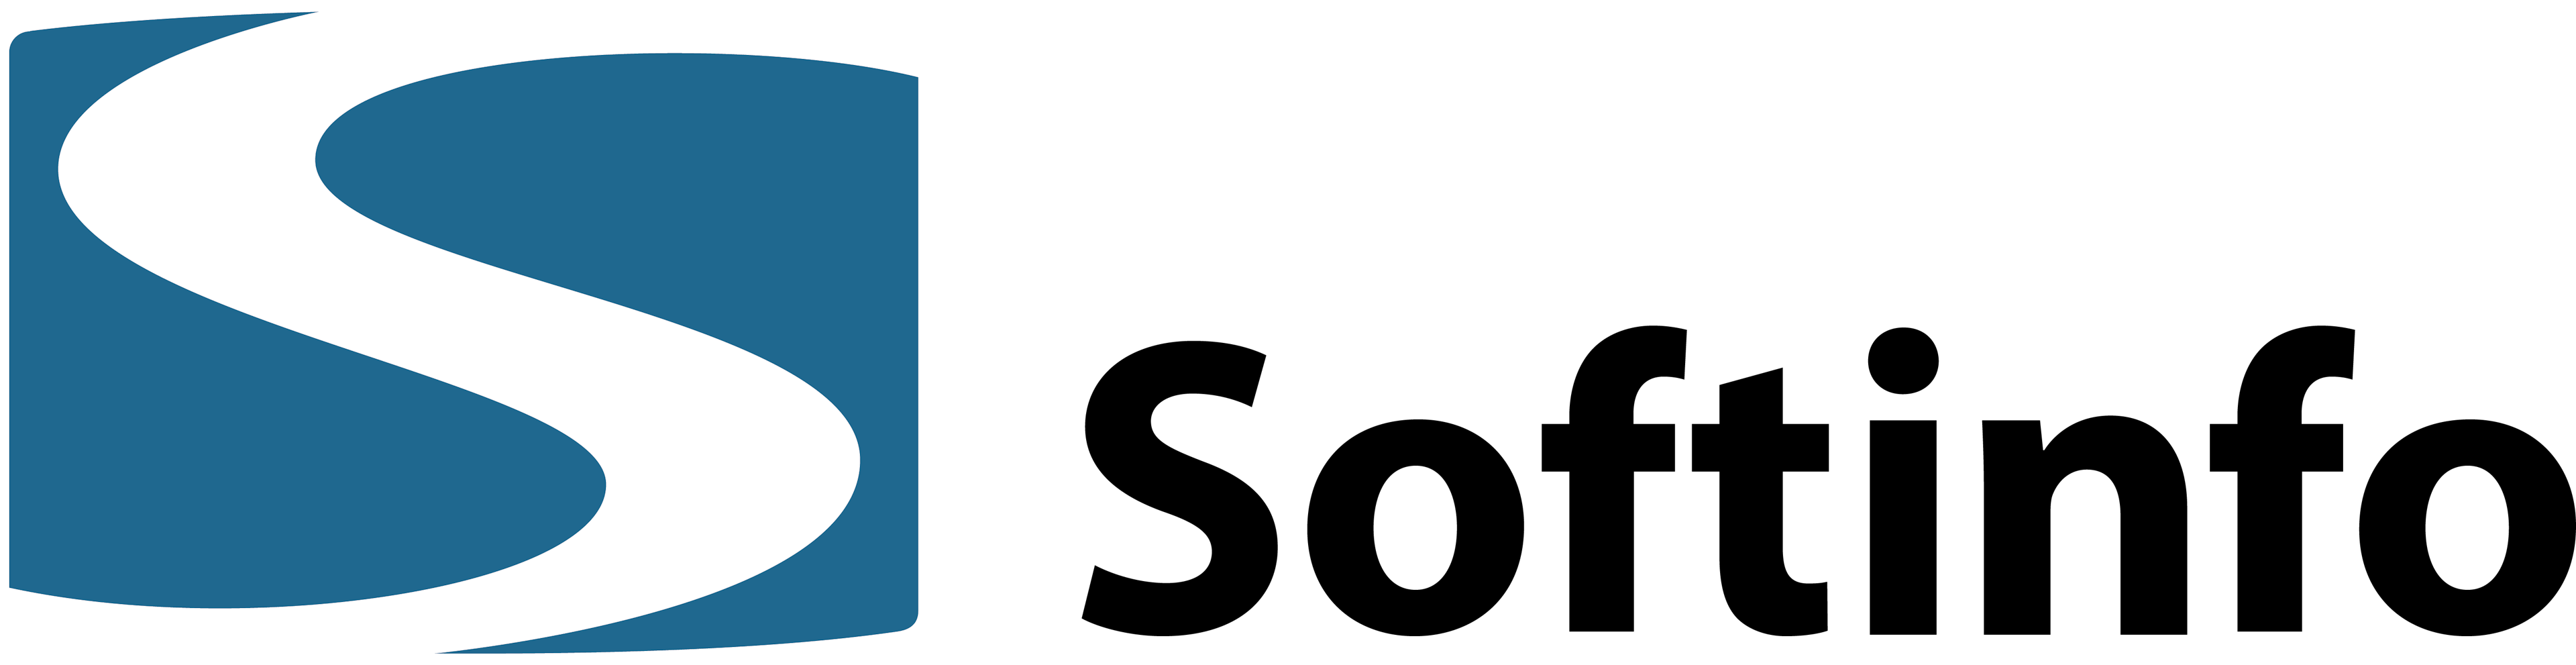 softinfo logo